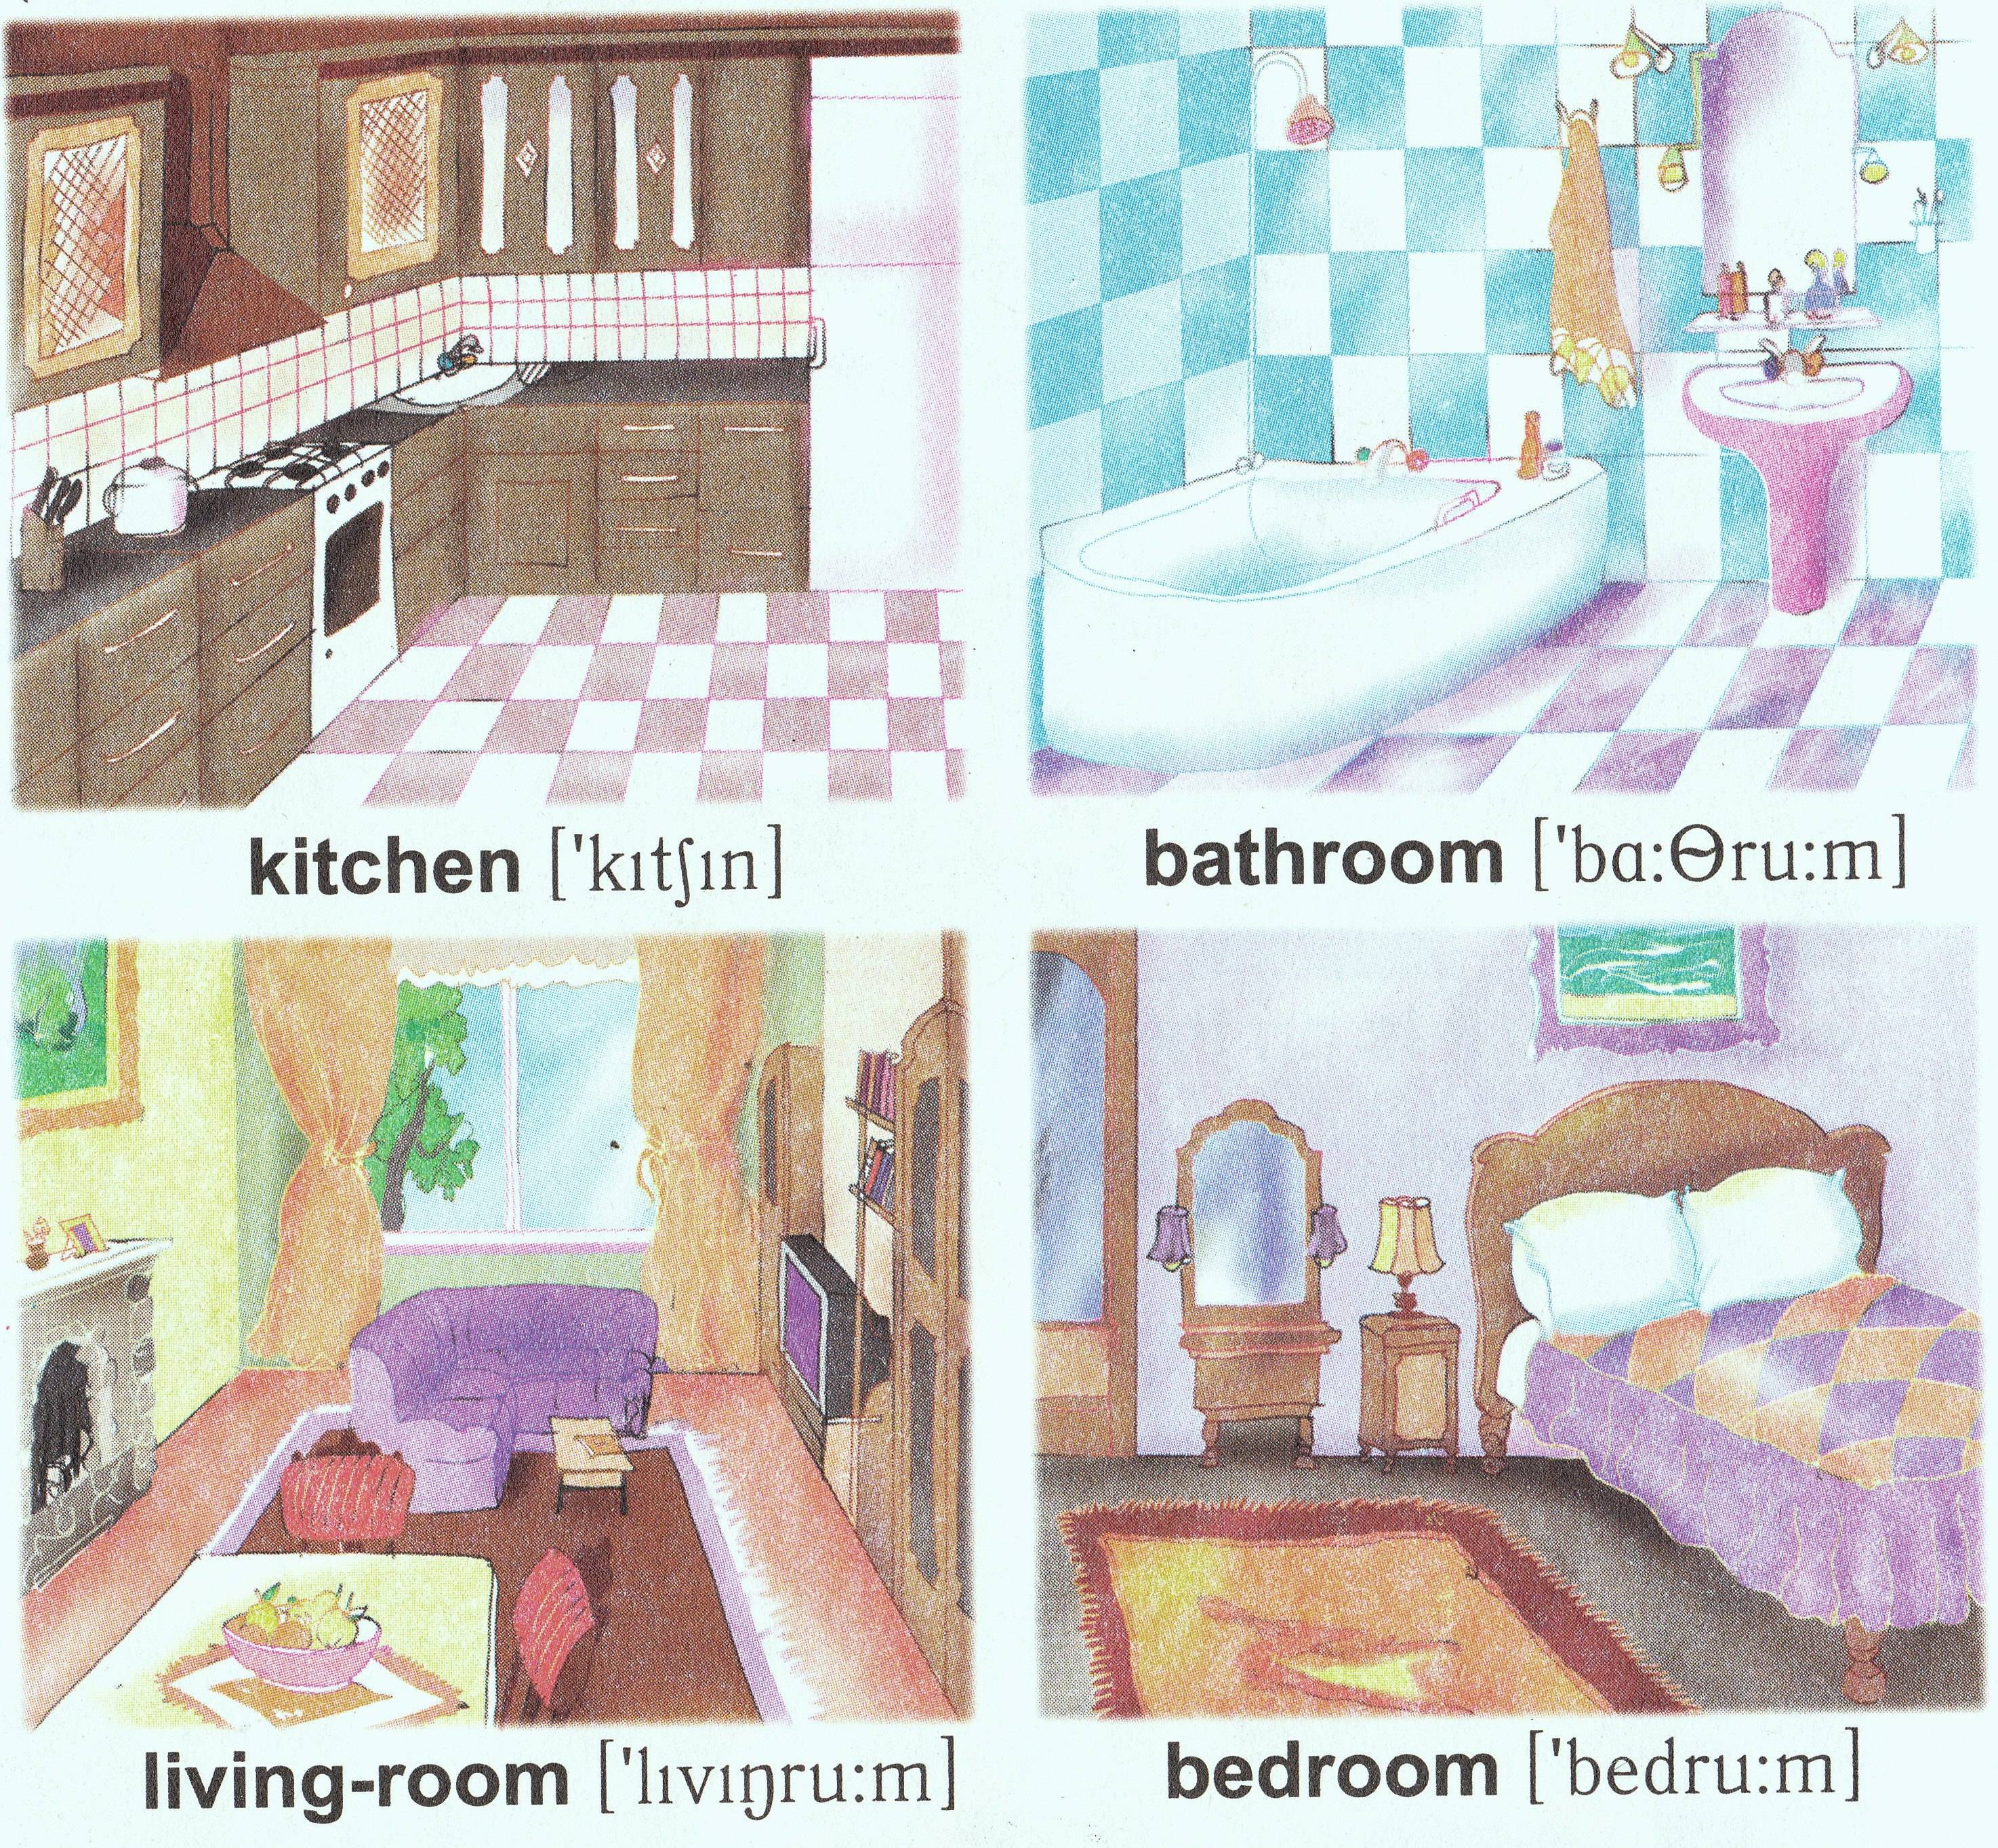 Английский язык тема комната. Название комнат на английском. Комнаты в квартире названия. Название комнат для детей. Комната для урока английского языка.